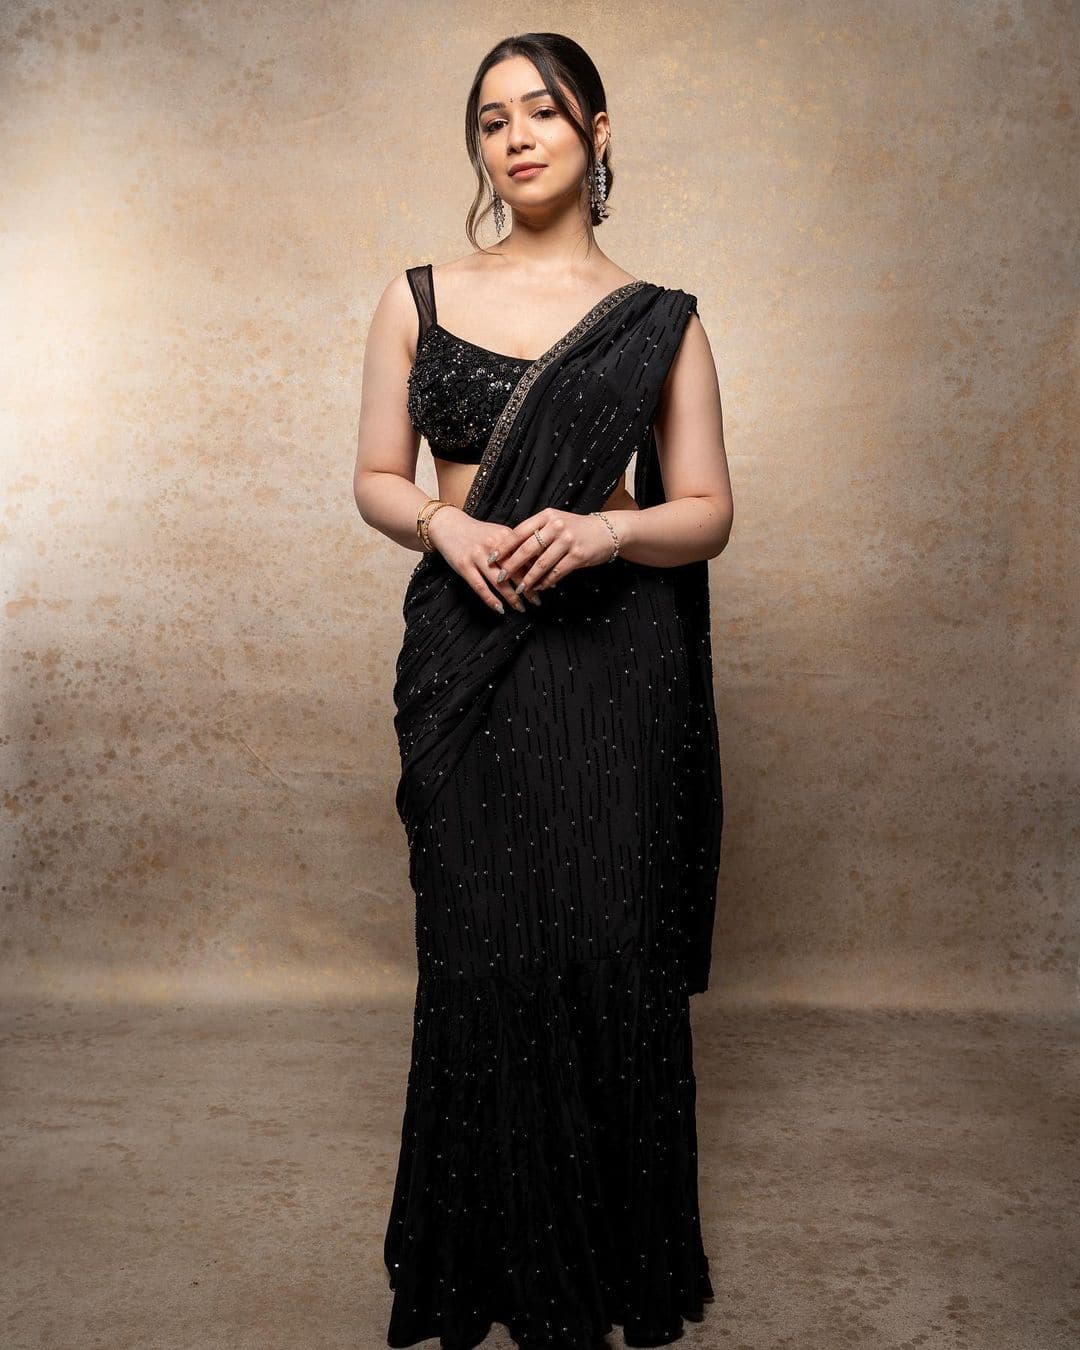 Sara Tendulkar Turns Up The Heat With Black Sari and Backless Blouse Look -  In Pics | News | Zee News